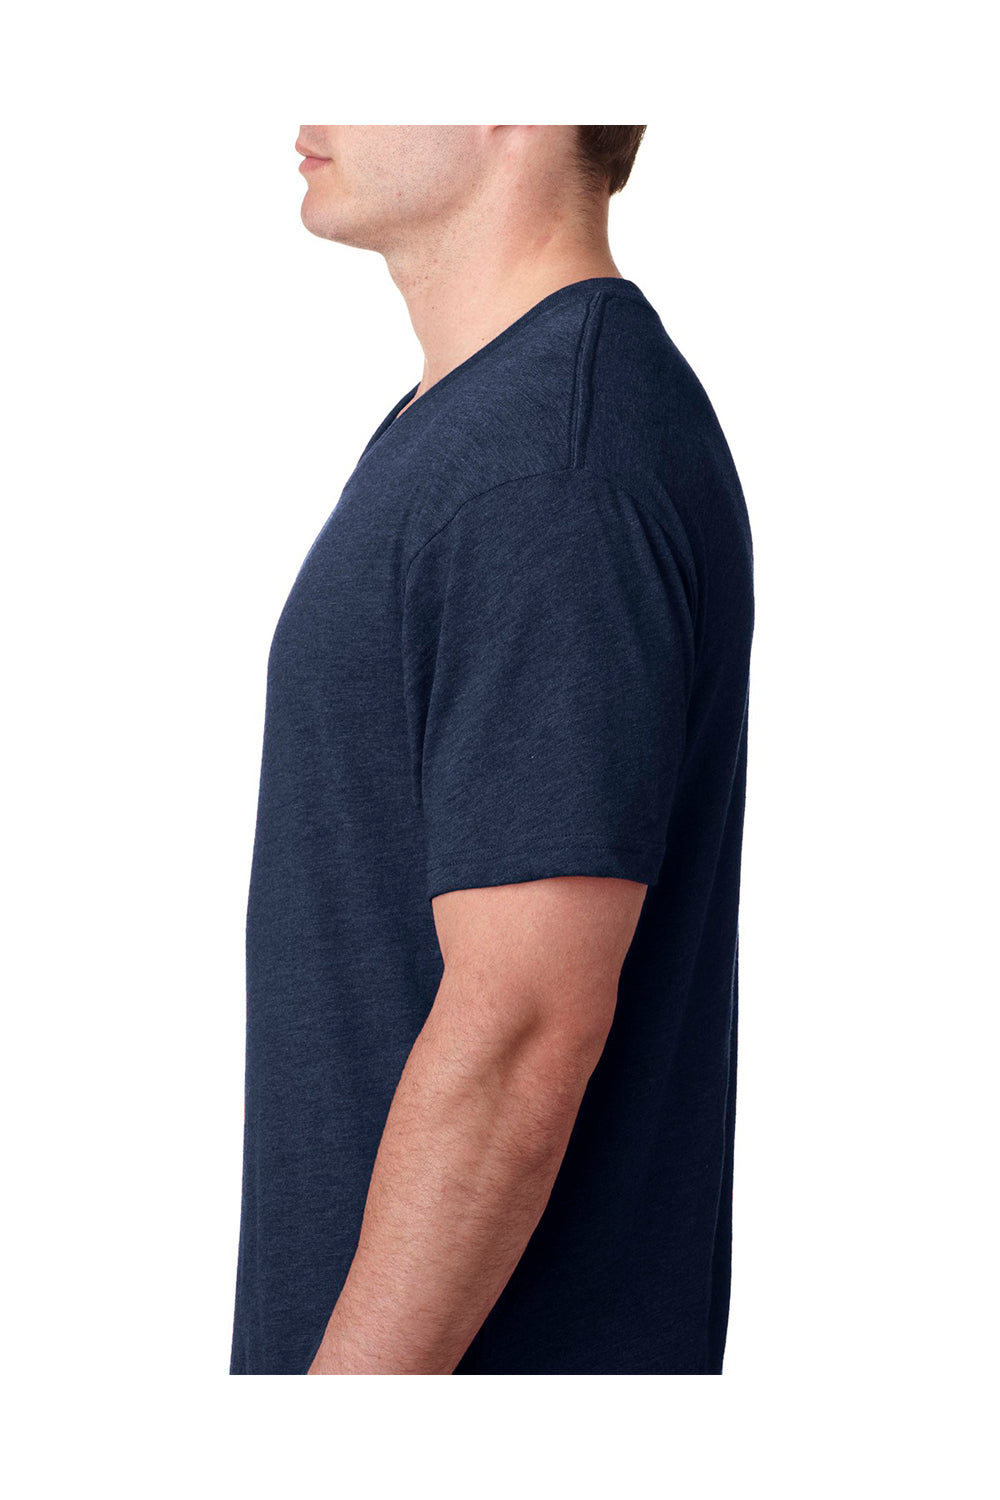 Next Level 6040 Mens Jersey Short Sleeve V-Neck T-Shirt Navy Blue Side